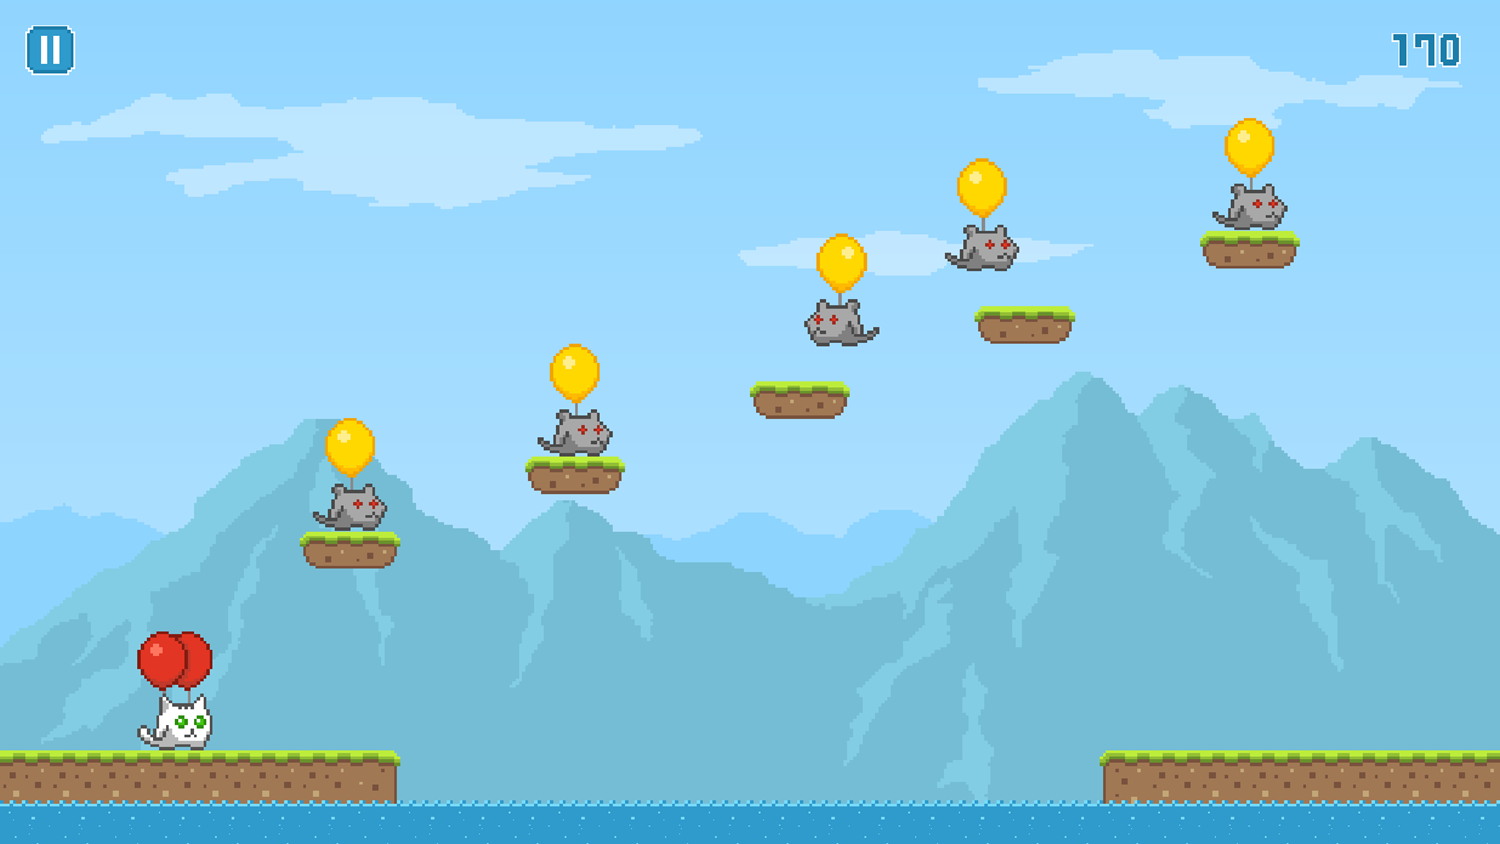 Balloon Fight Game Level Progress Screenshot.